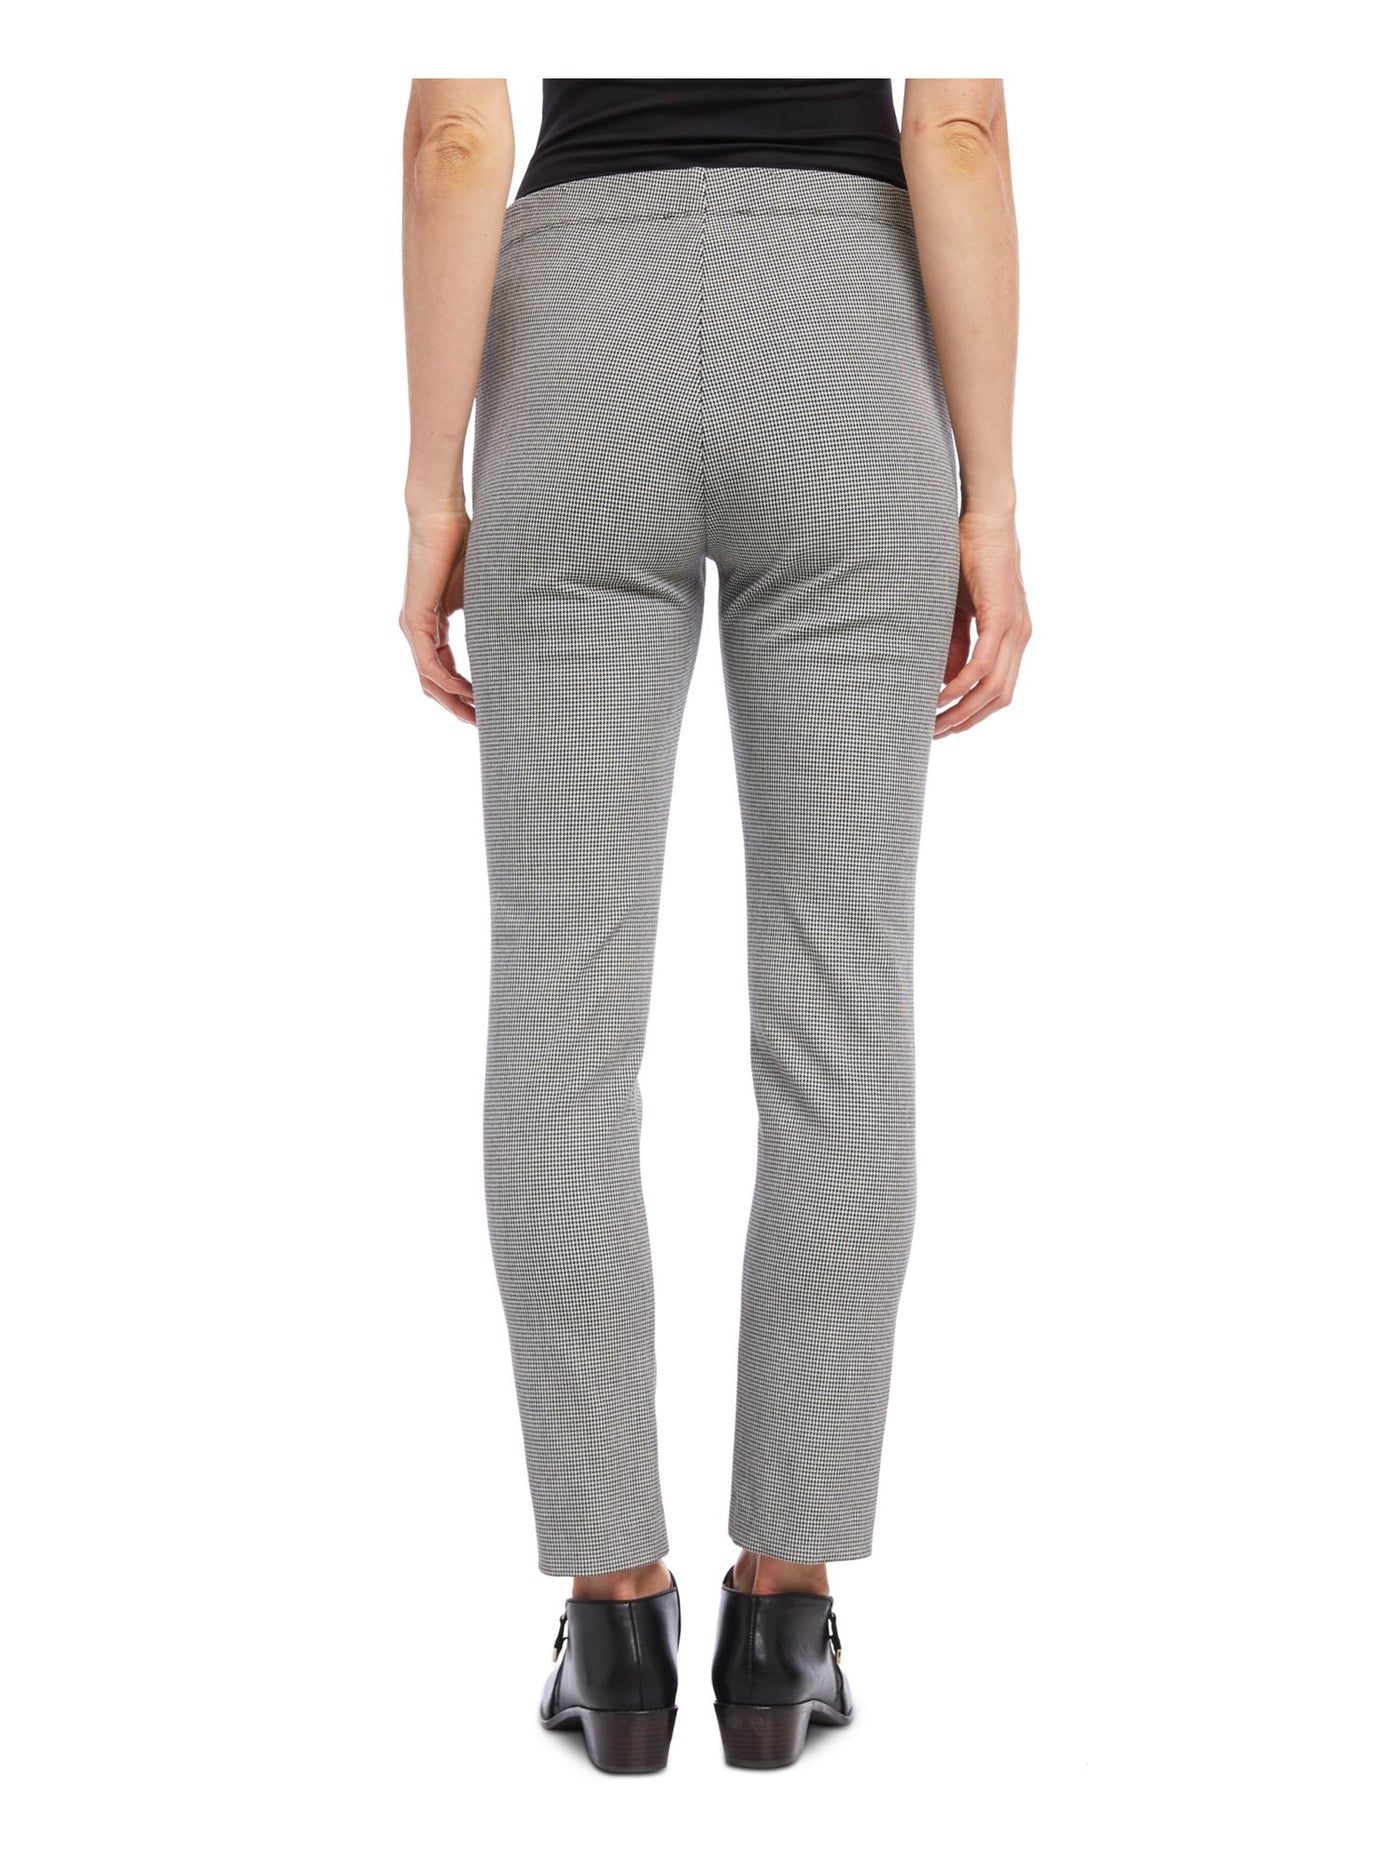 KAREN KANE Womens Gray Stretch Houndstooth Wear To Work Skinny Pants XL